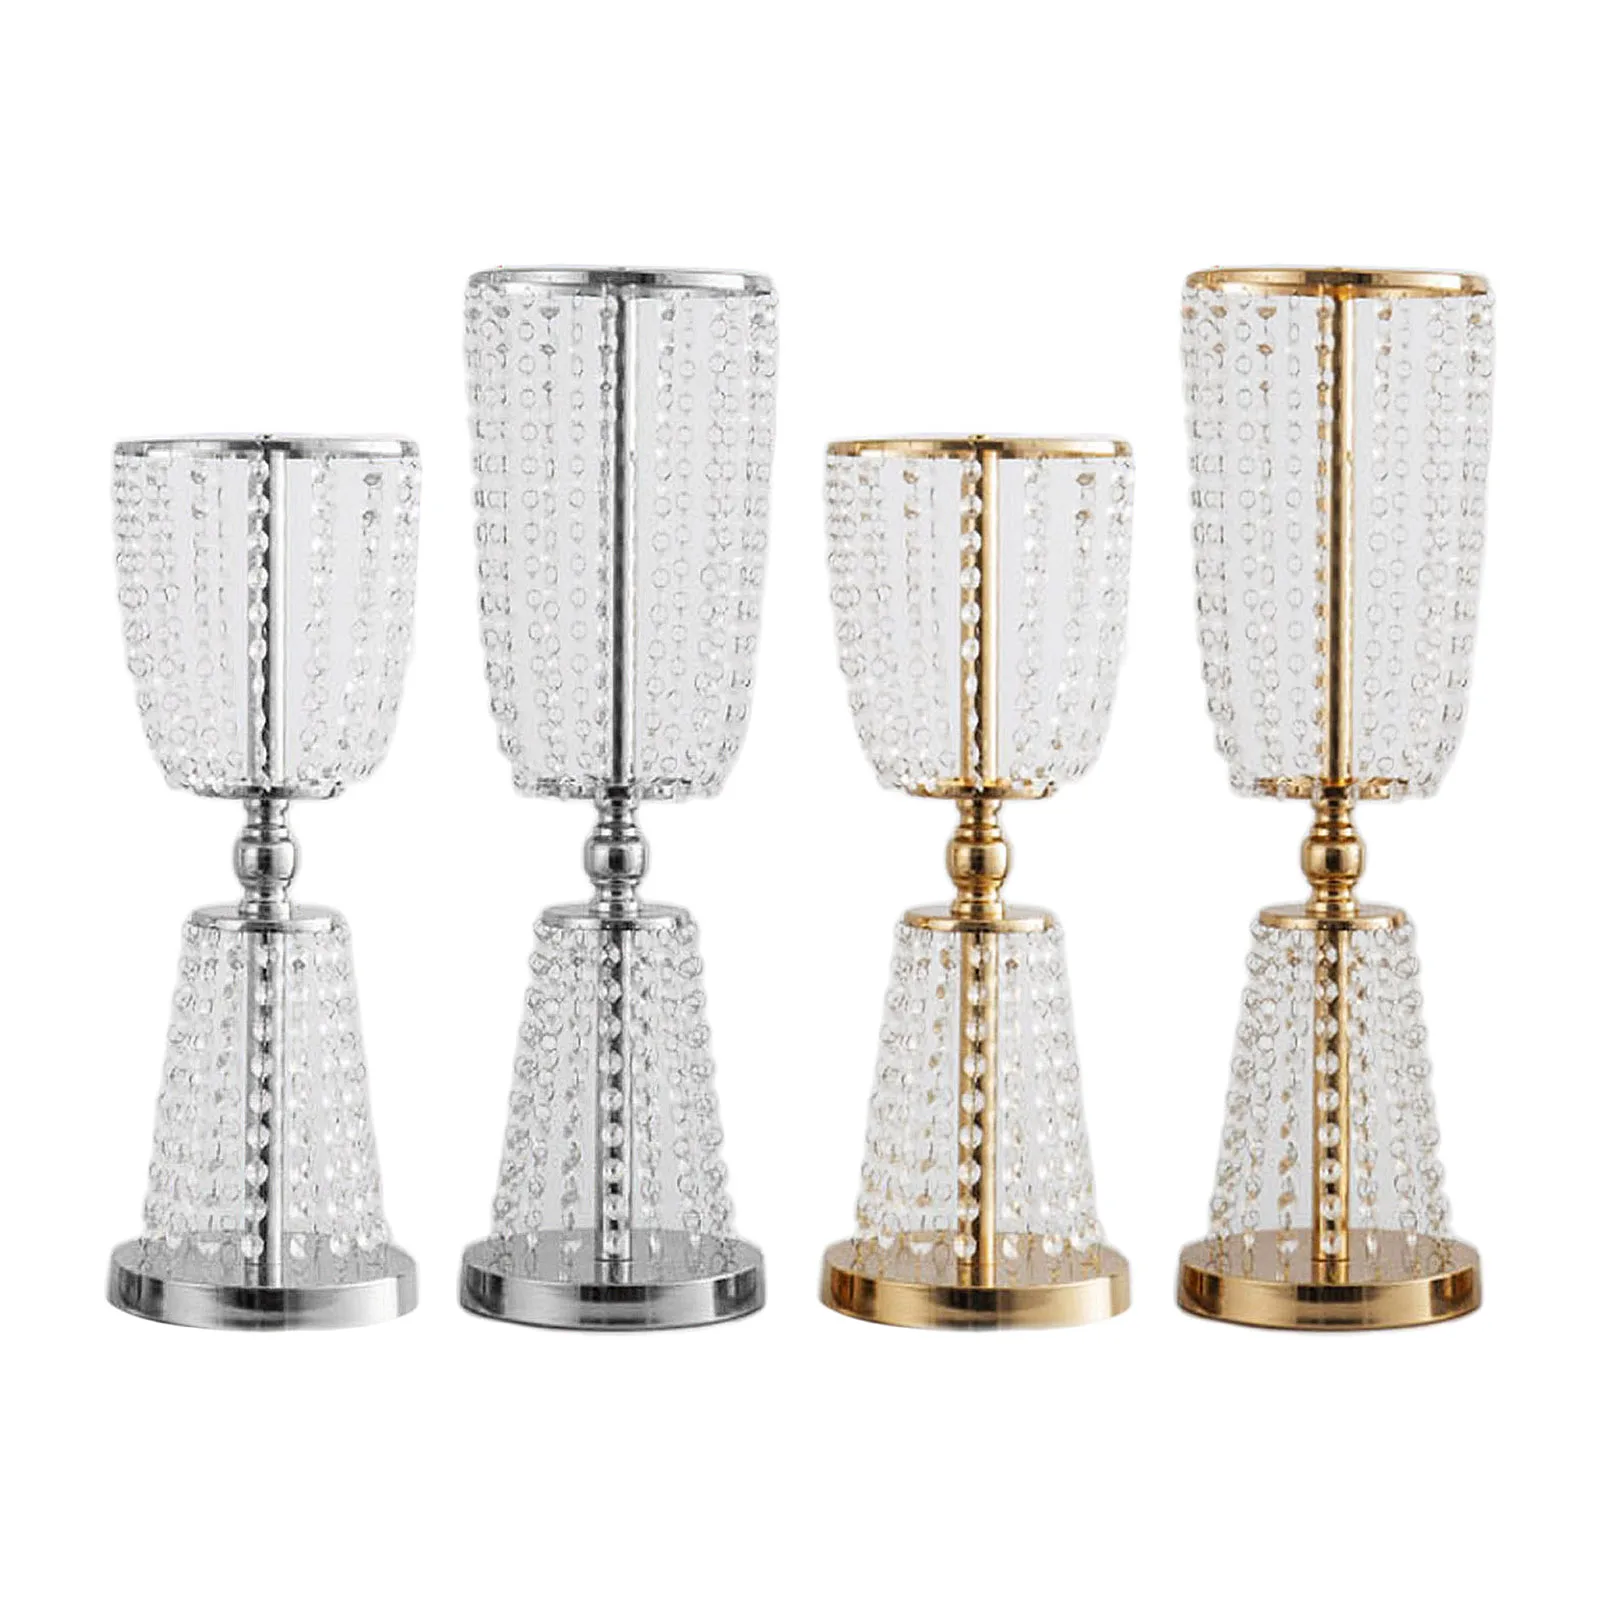 Crystal Metal Pillar Candle Holder Wedding Table Centerpiece Flower Vase